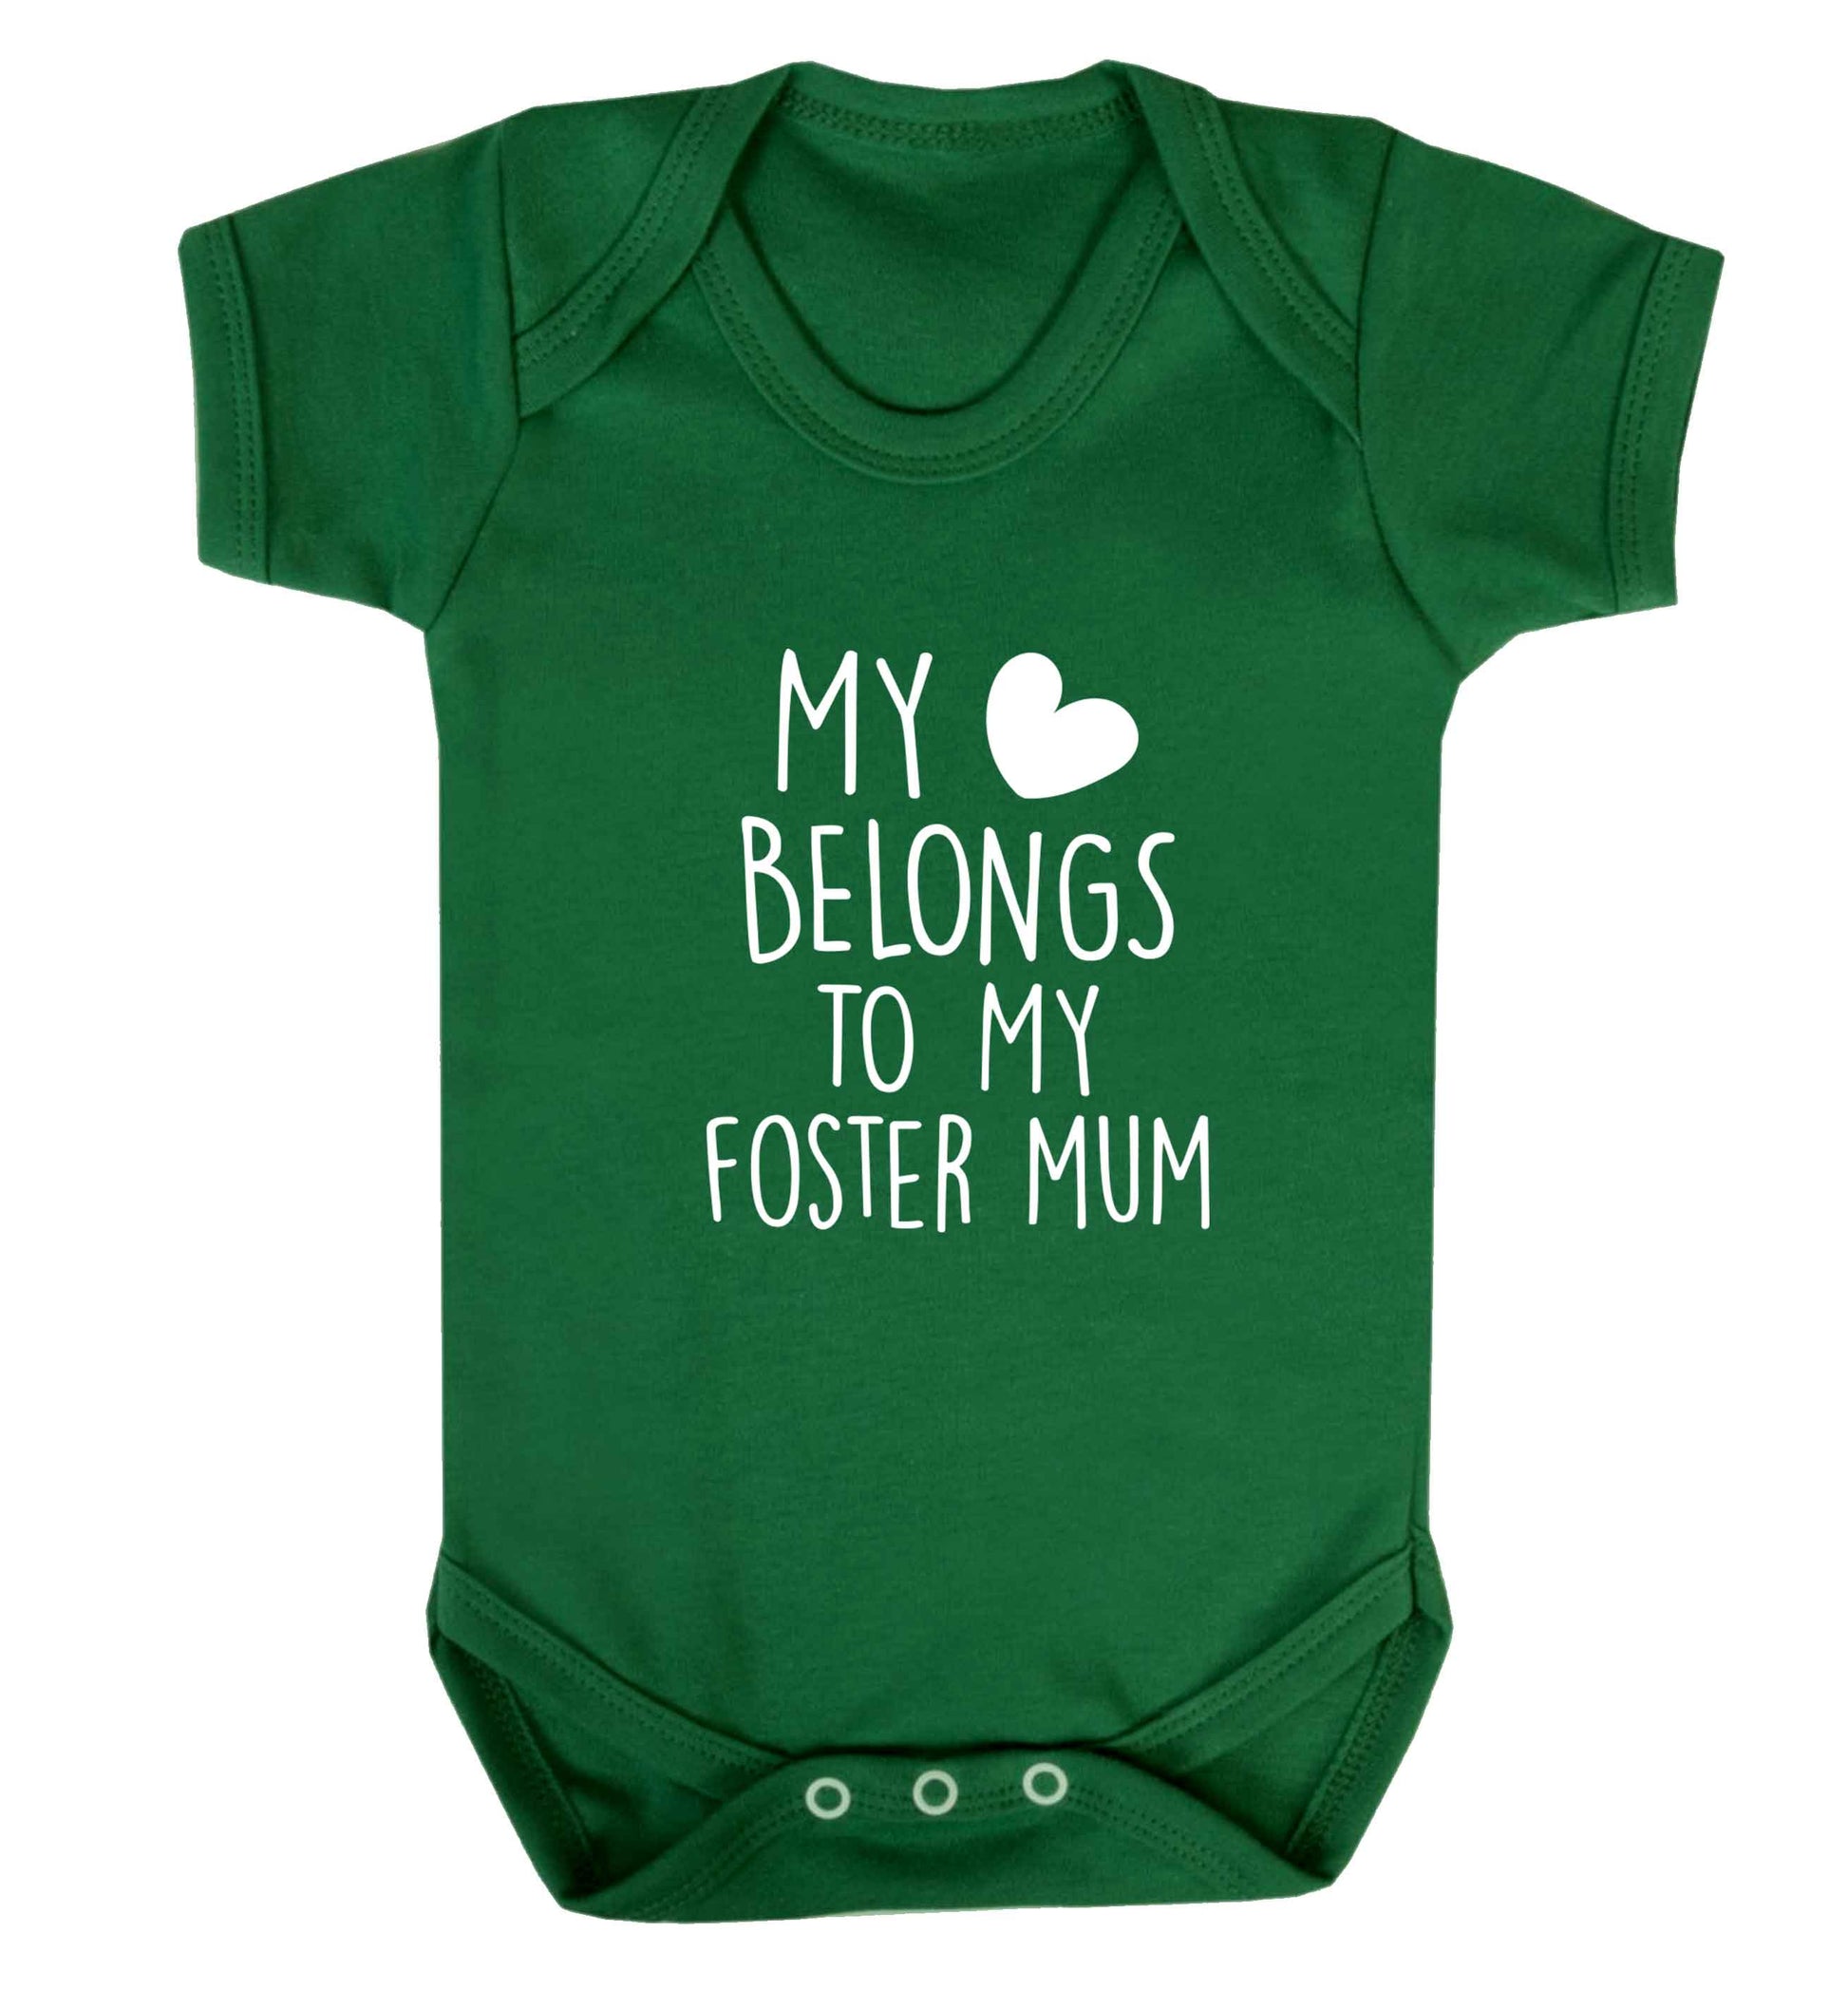 My heart belongs to my foster mum baby vest green 18-24 months